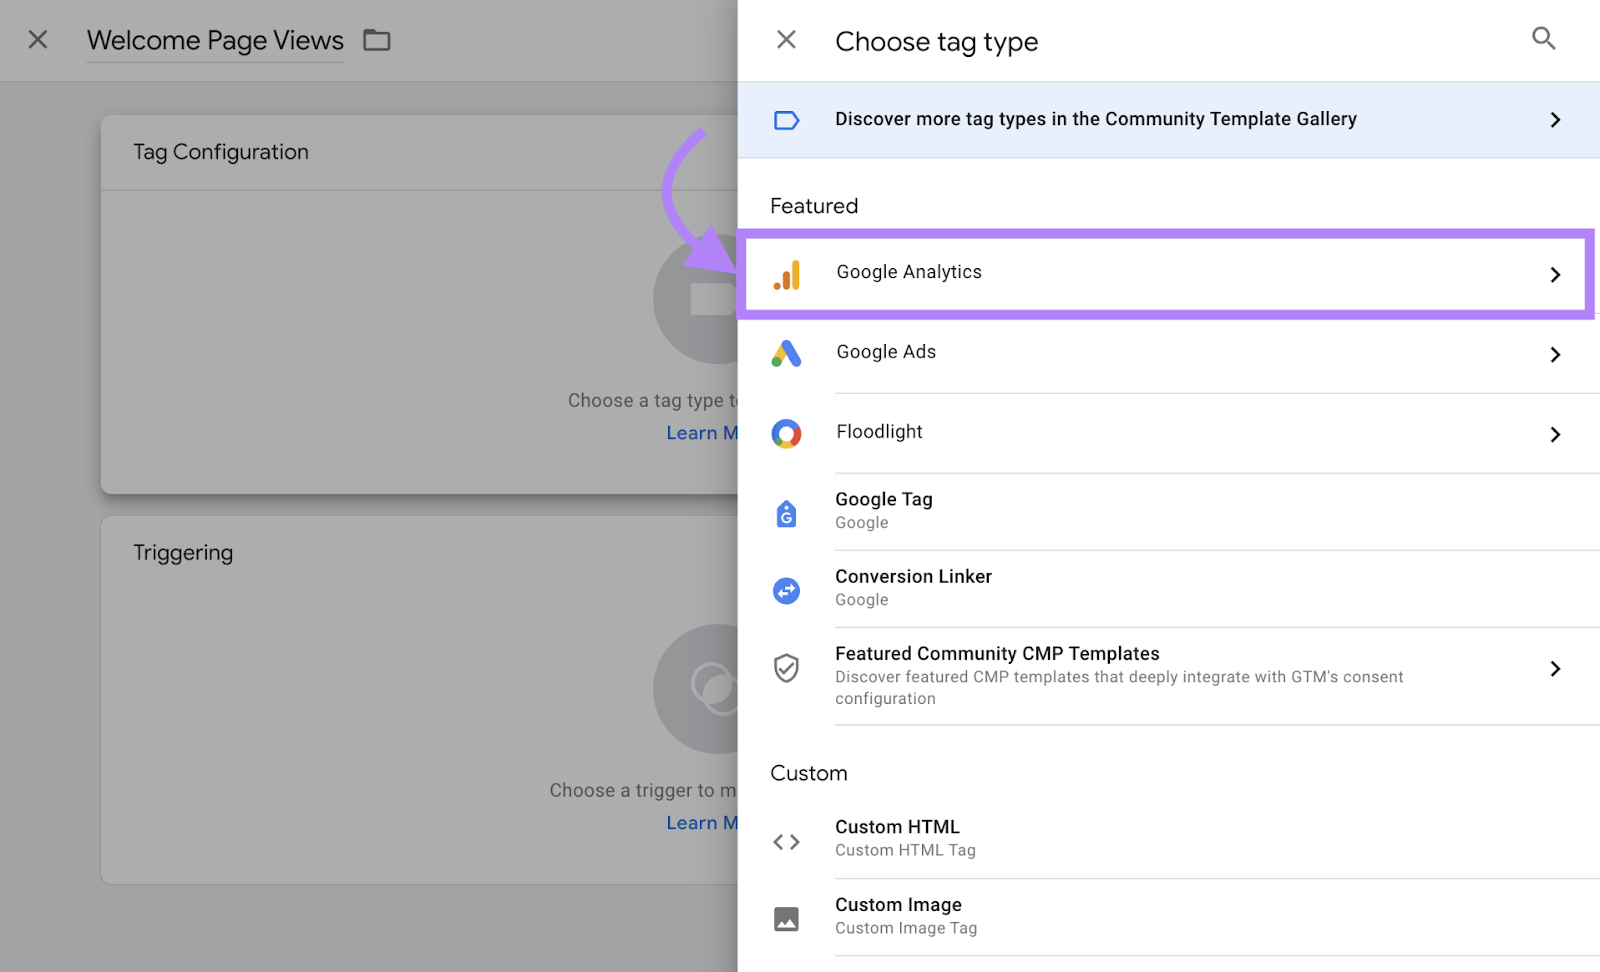 “Google Analytics" selected under "Choose tag type" menu